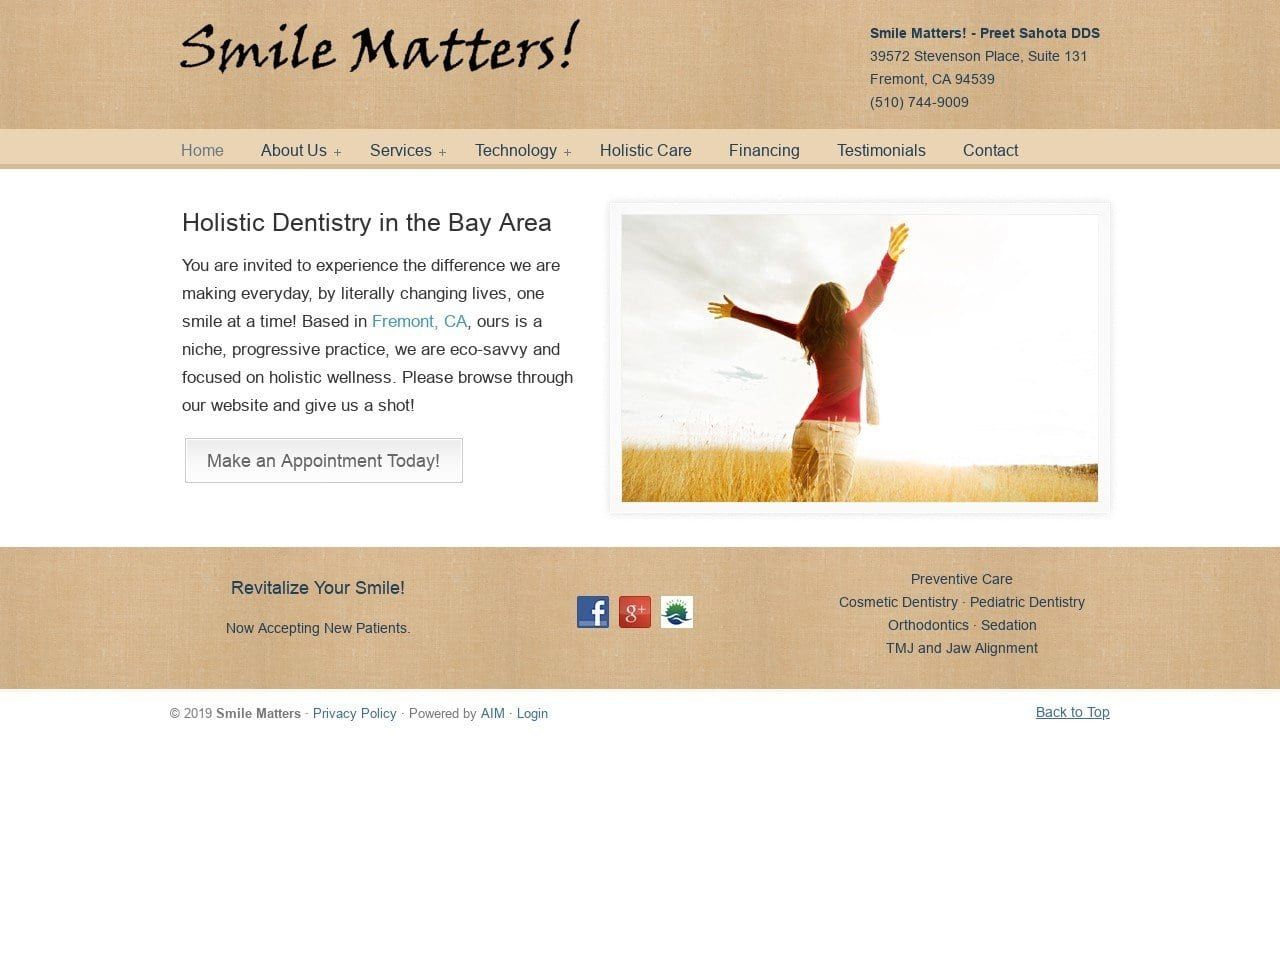 Smile Matters! Website Screenshot from smile-matters.com